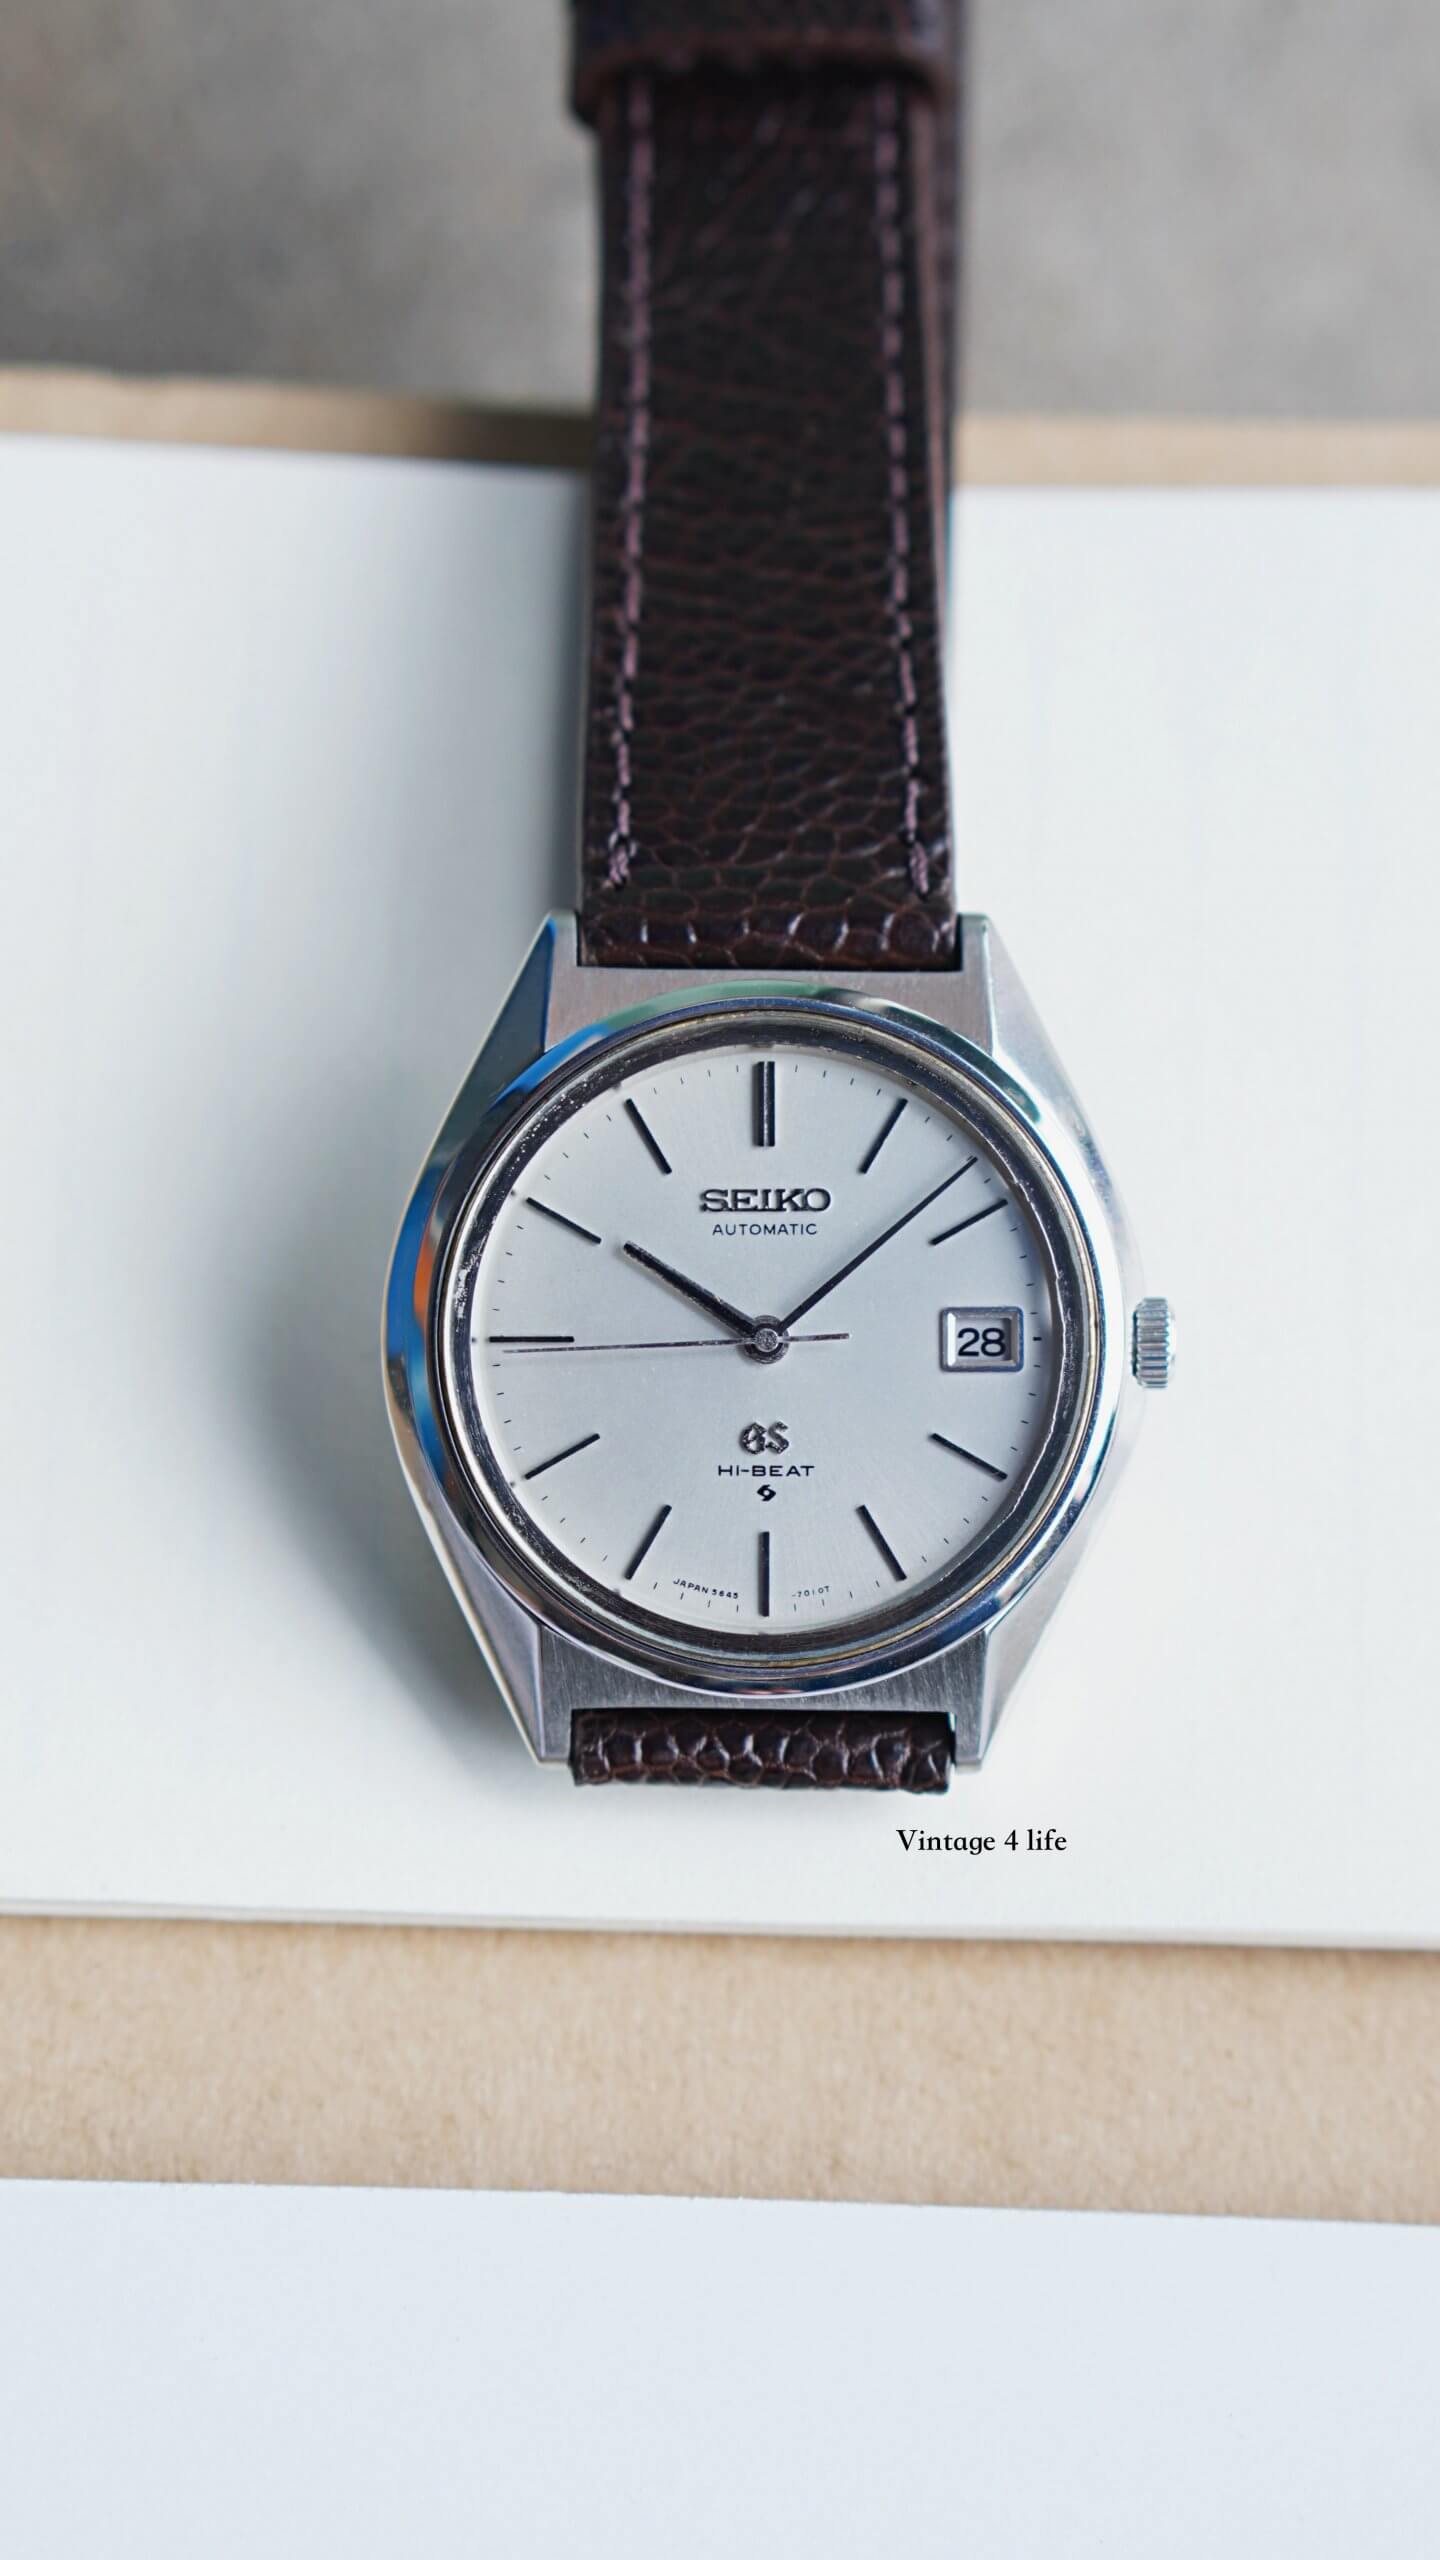 GRAND SEIKO Vintage Automatic Hi-Beat 5645-7010 - Vintage 4 life - Vintage  watches